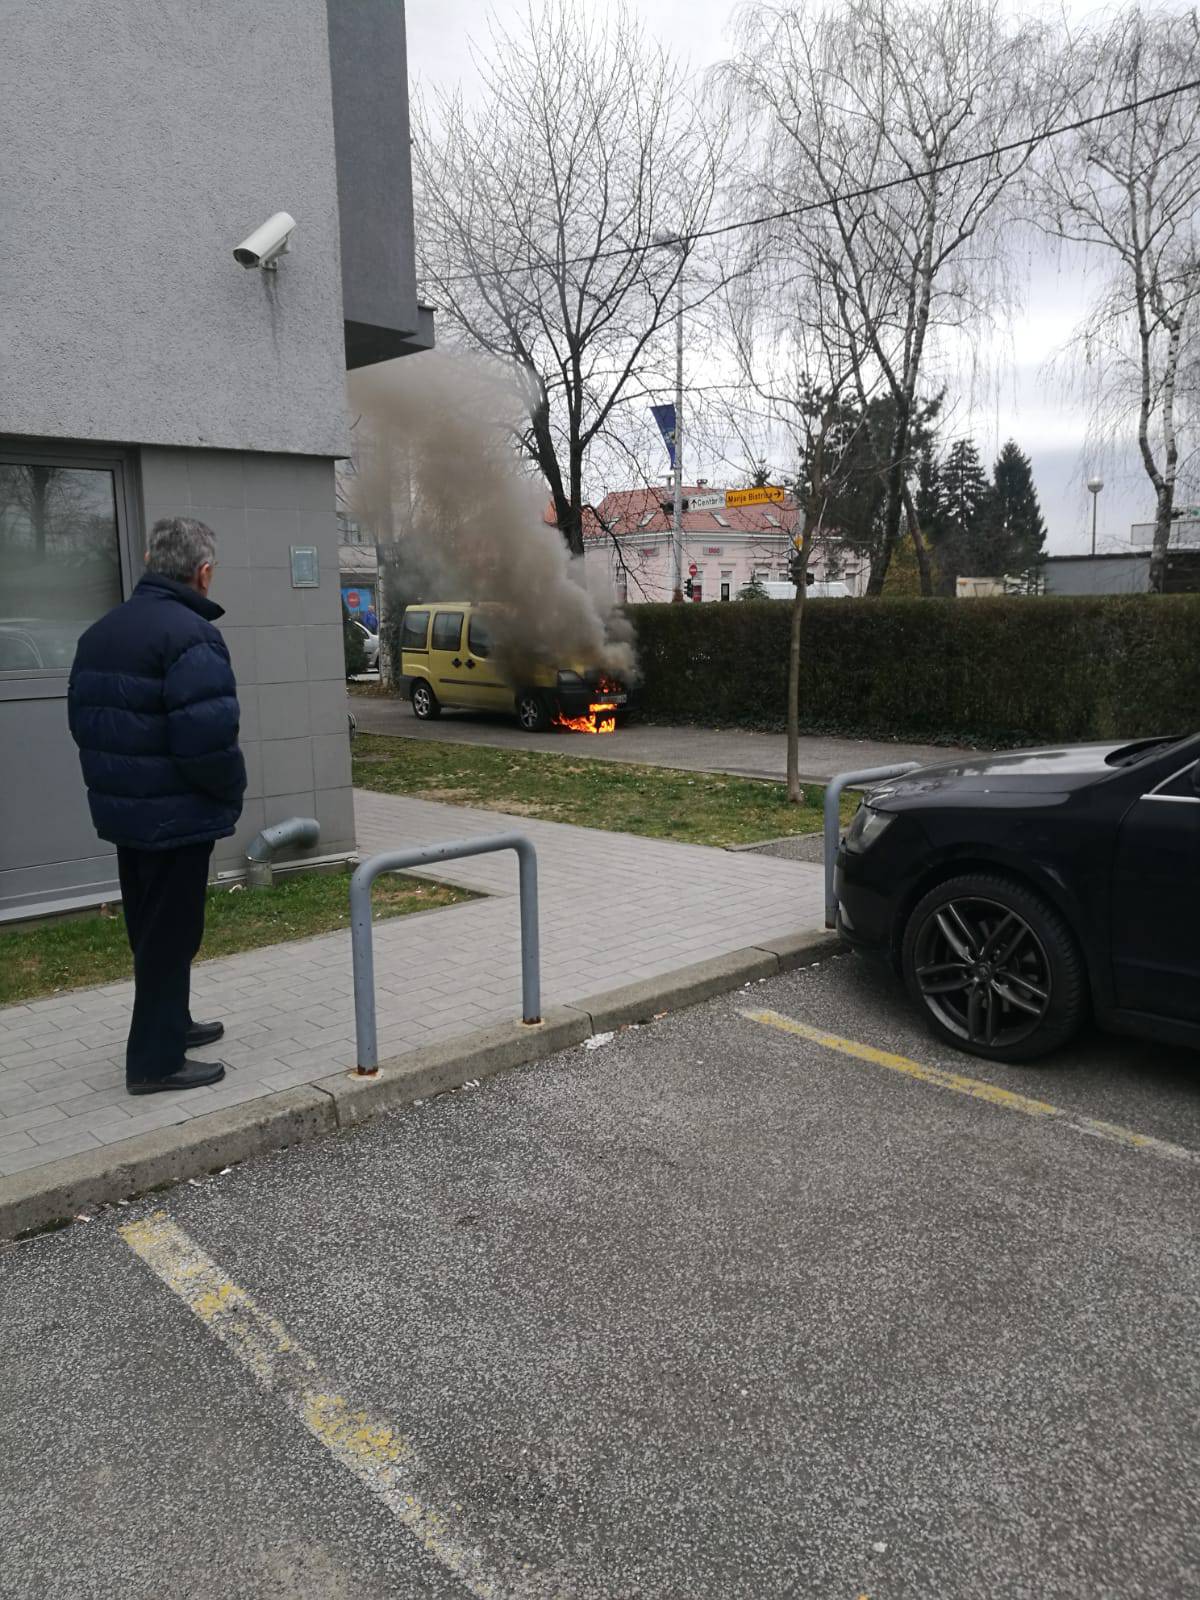 Automobil planuo na parkingu: Vlasnik sam počeo gasiti požar